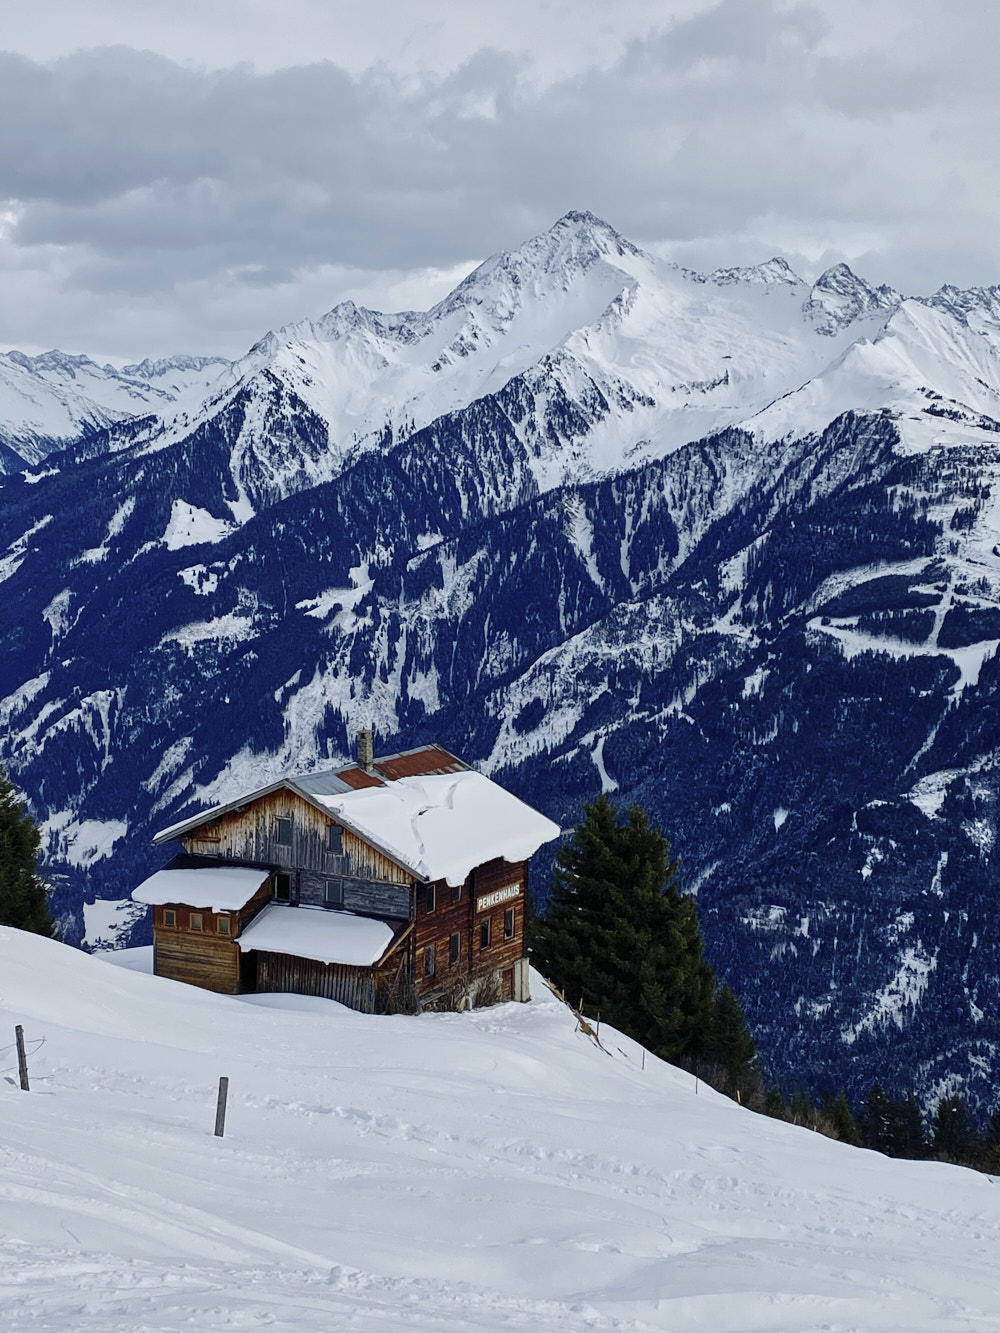 Next day, we try  Eggalm Bahnen Pinken Tux-Lanersbach Ski Area